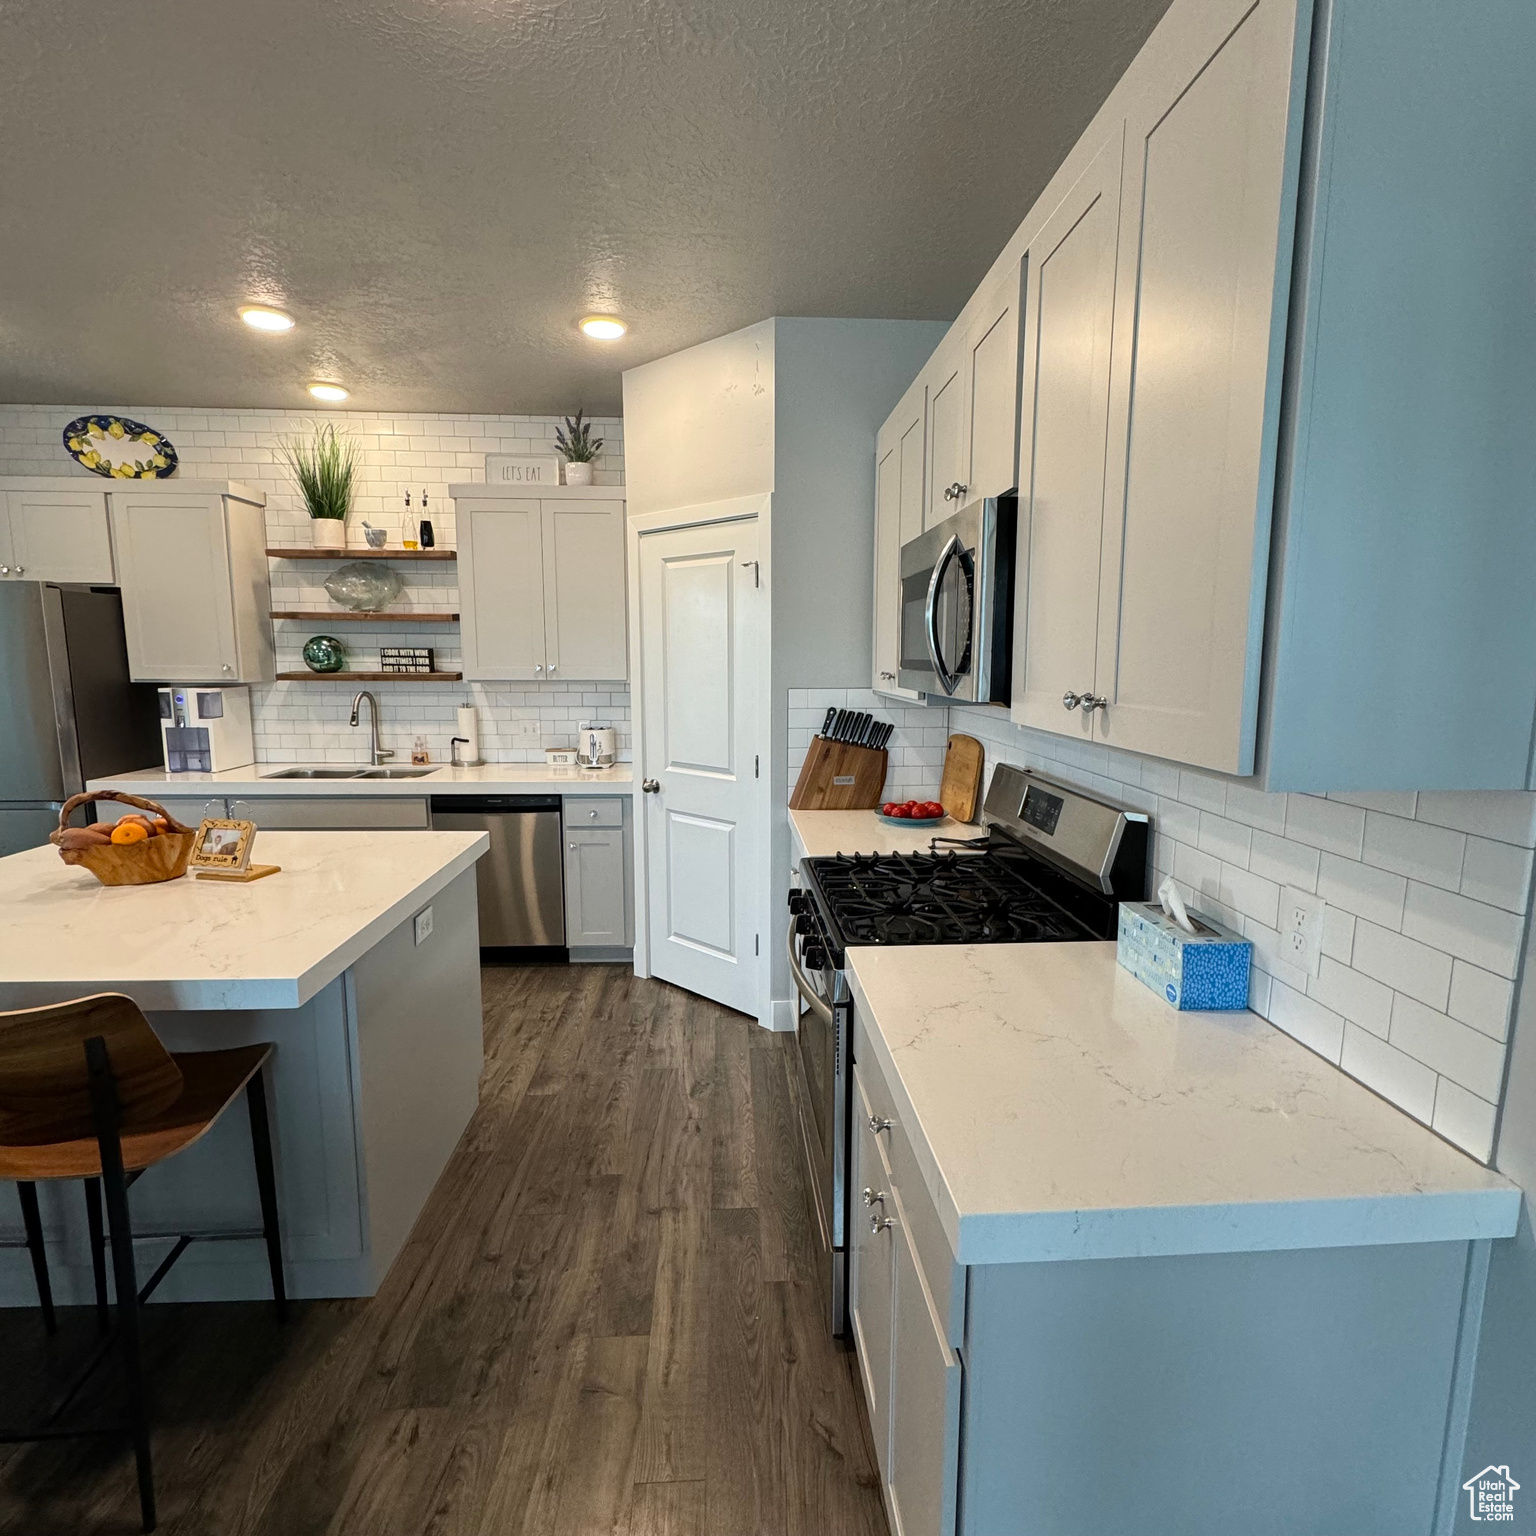 Kitchen with a textured ceiling, sink, backsplash, dark hardwood / wood-style flooring, and stainless steel appliances